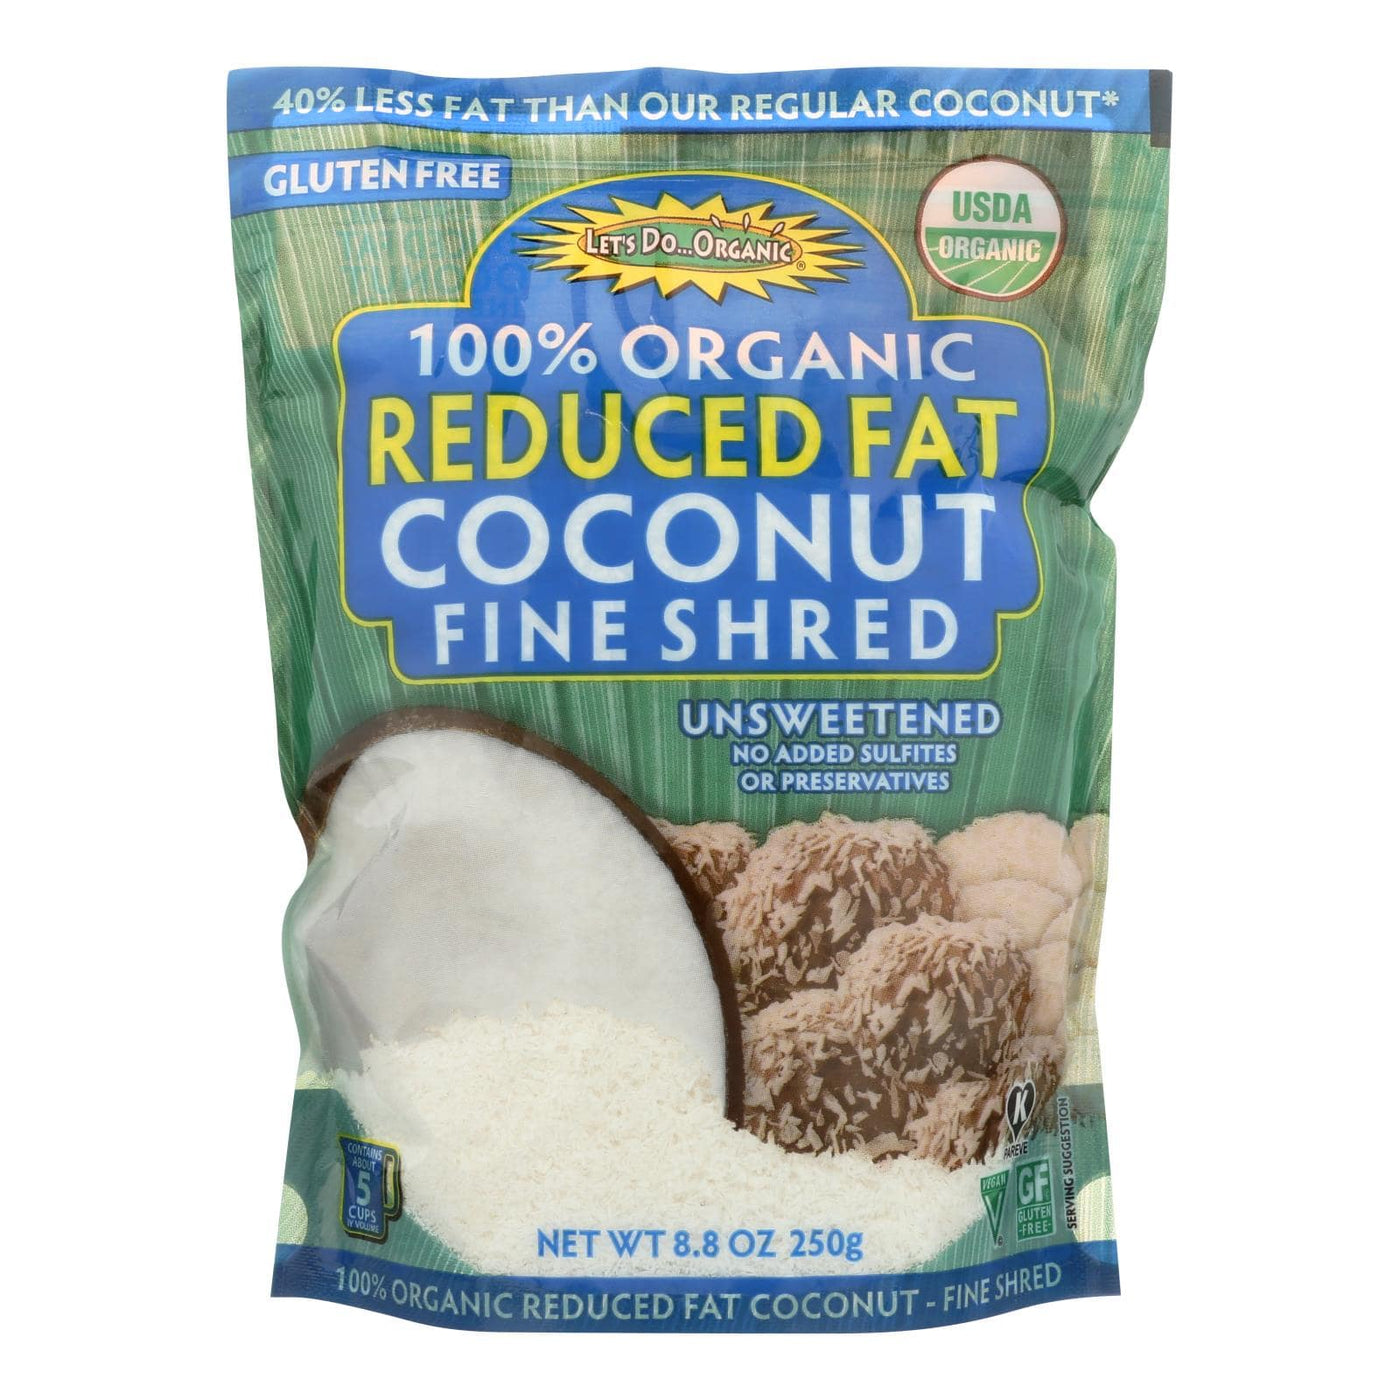 Buy Let's Do Organics Organic Lite Shredded - Coconut - Case Of 12 - 8.8 Oz.  at OnlyNaturals.us